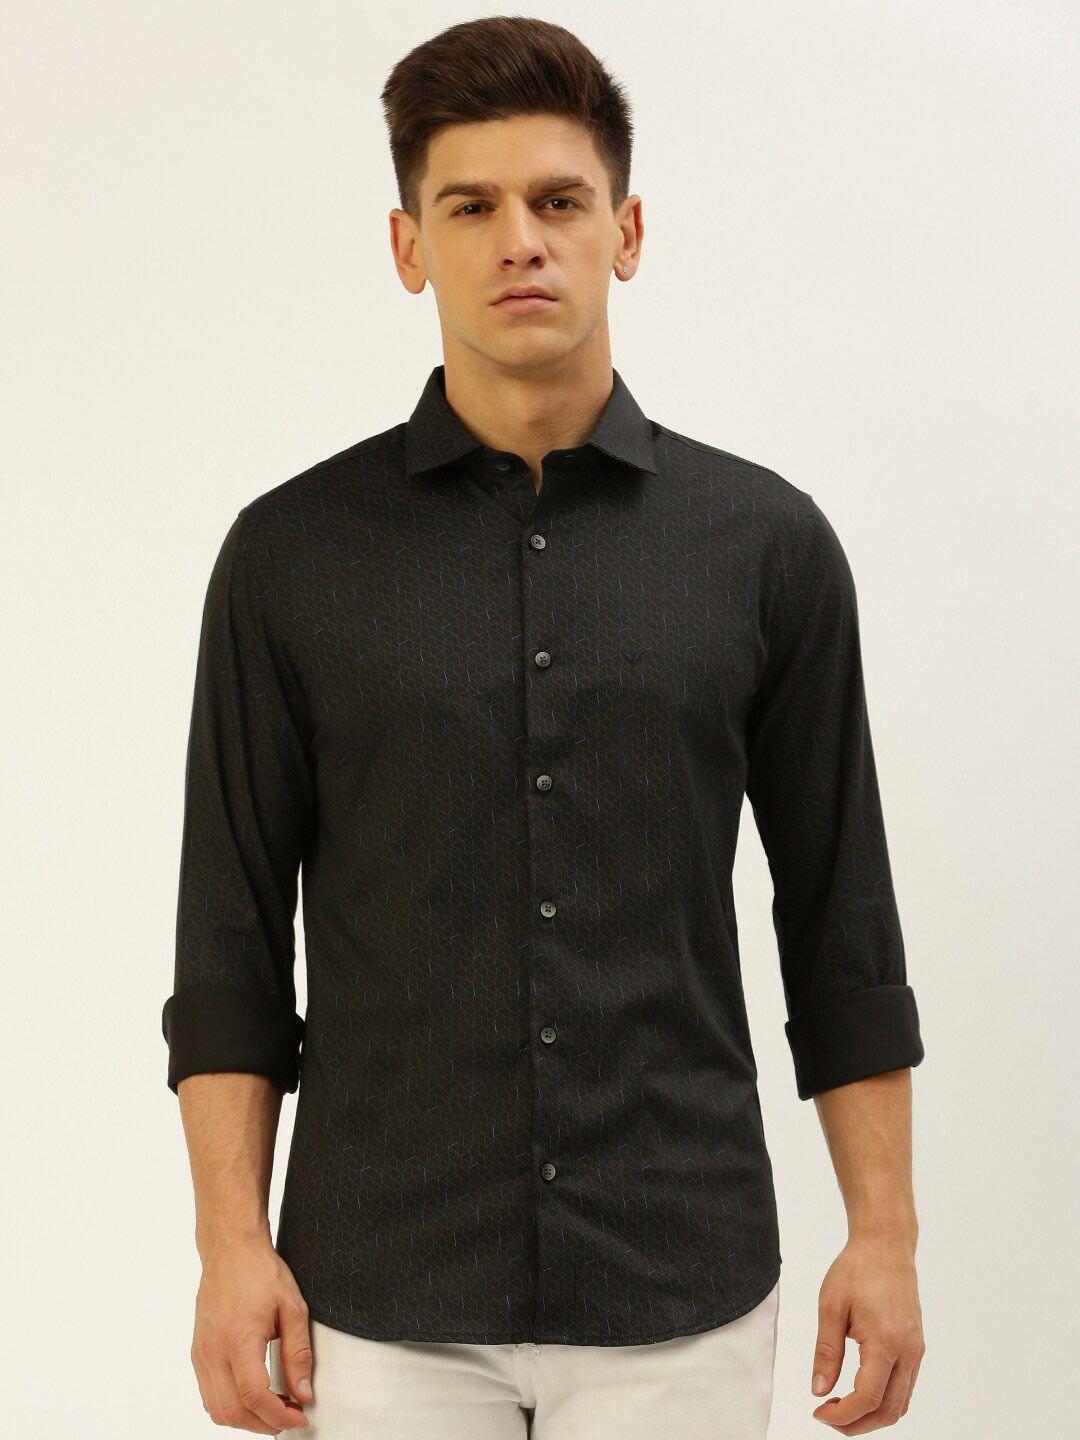 showoff comfort geometric printed cotton casual shirt